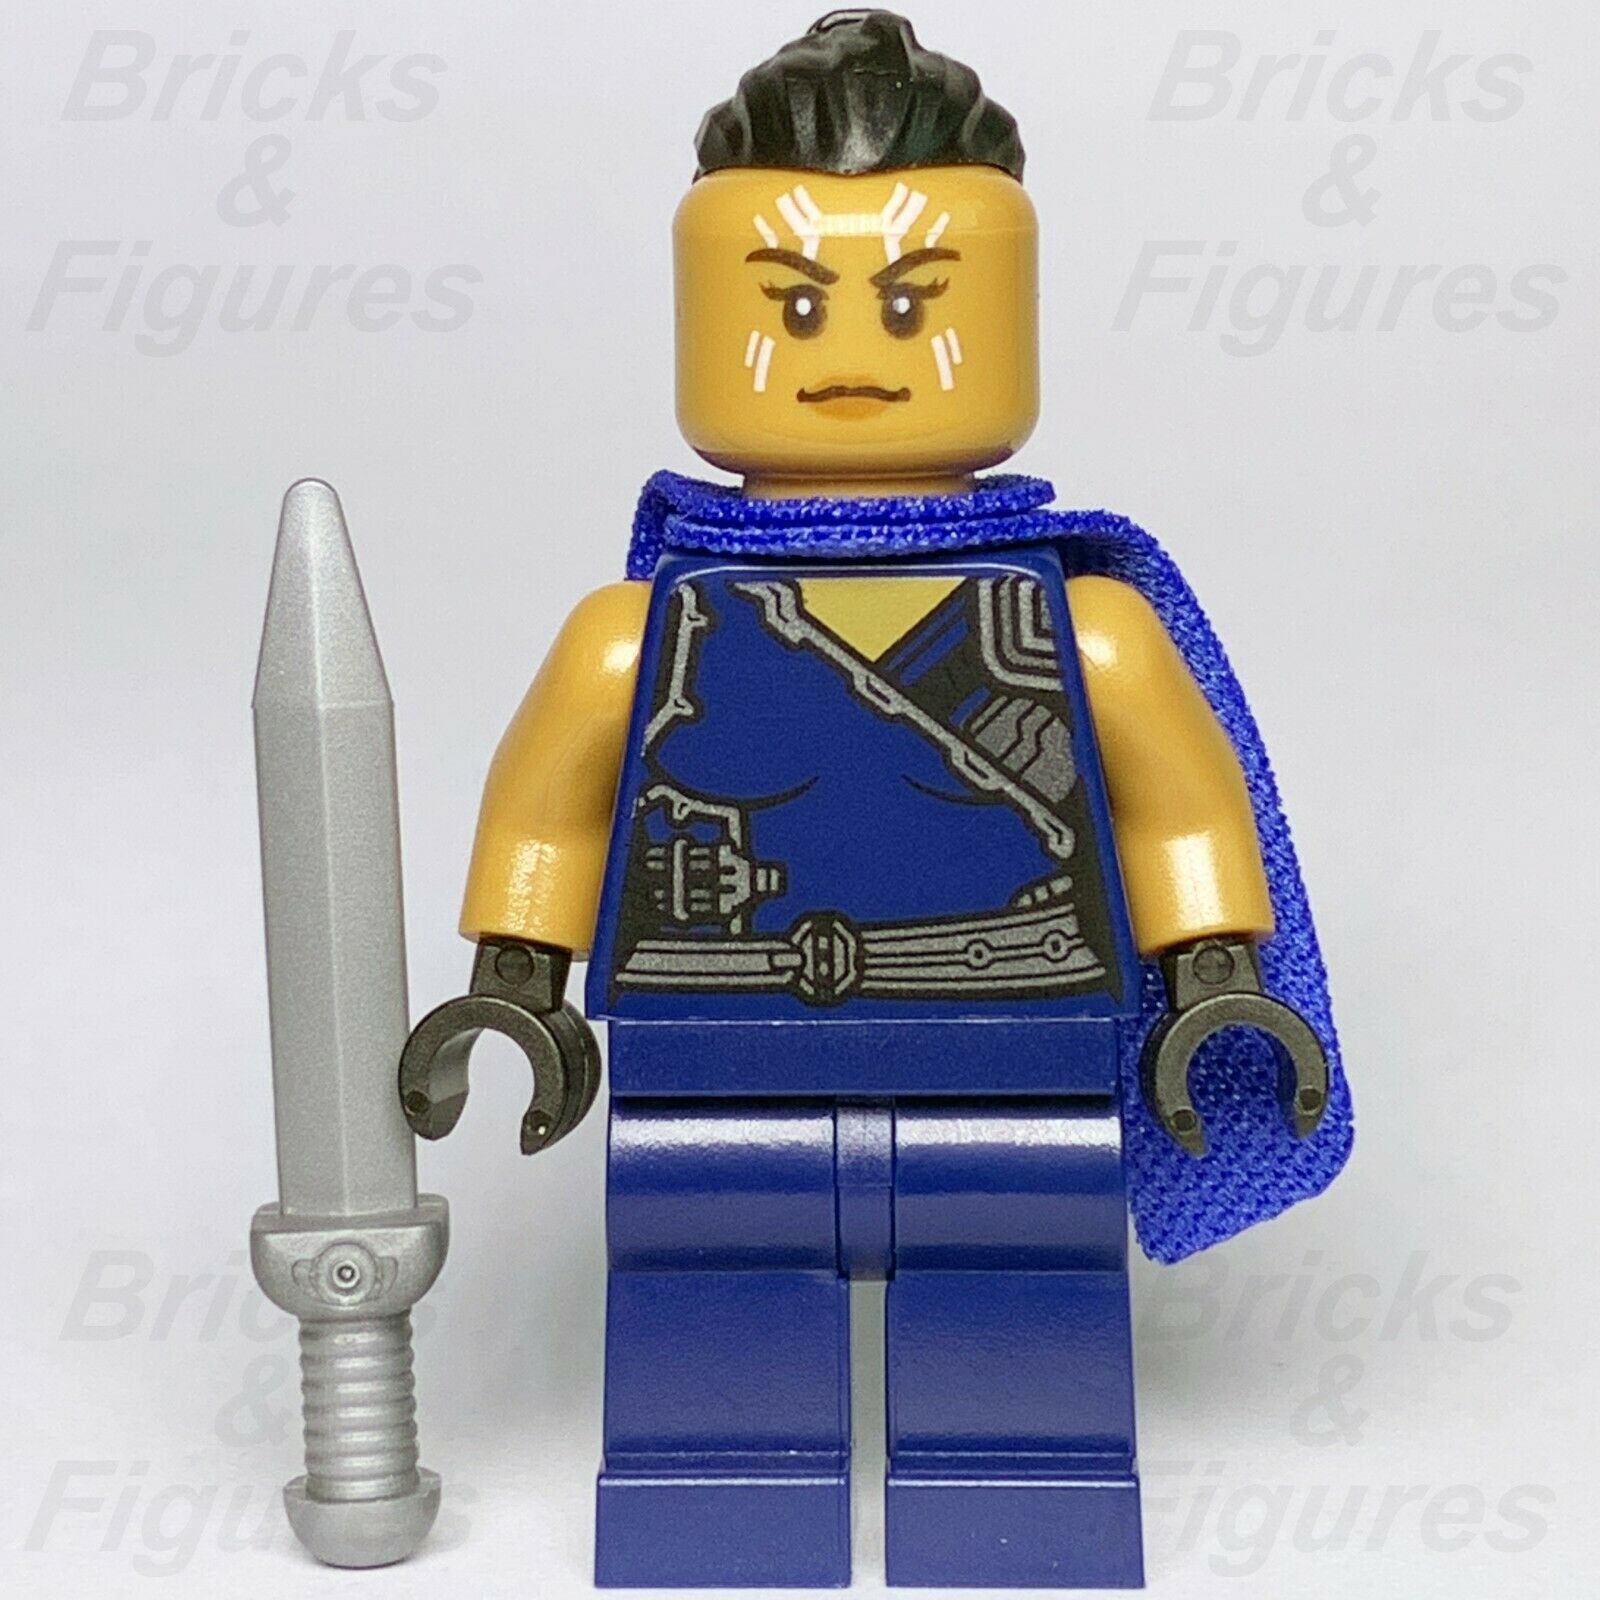 New Marvel Super Heroes LEGO Valkyrie Thor Ragnarok Minifigure from set 76084 - Bricks & Figures